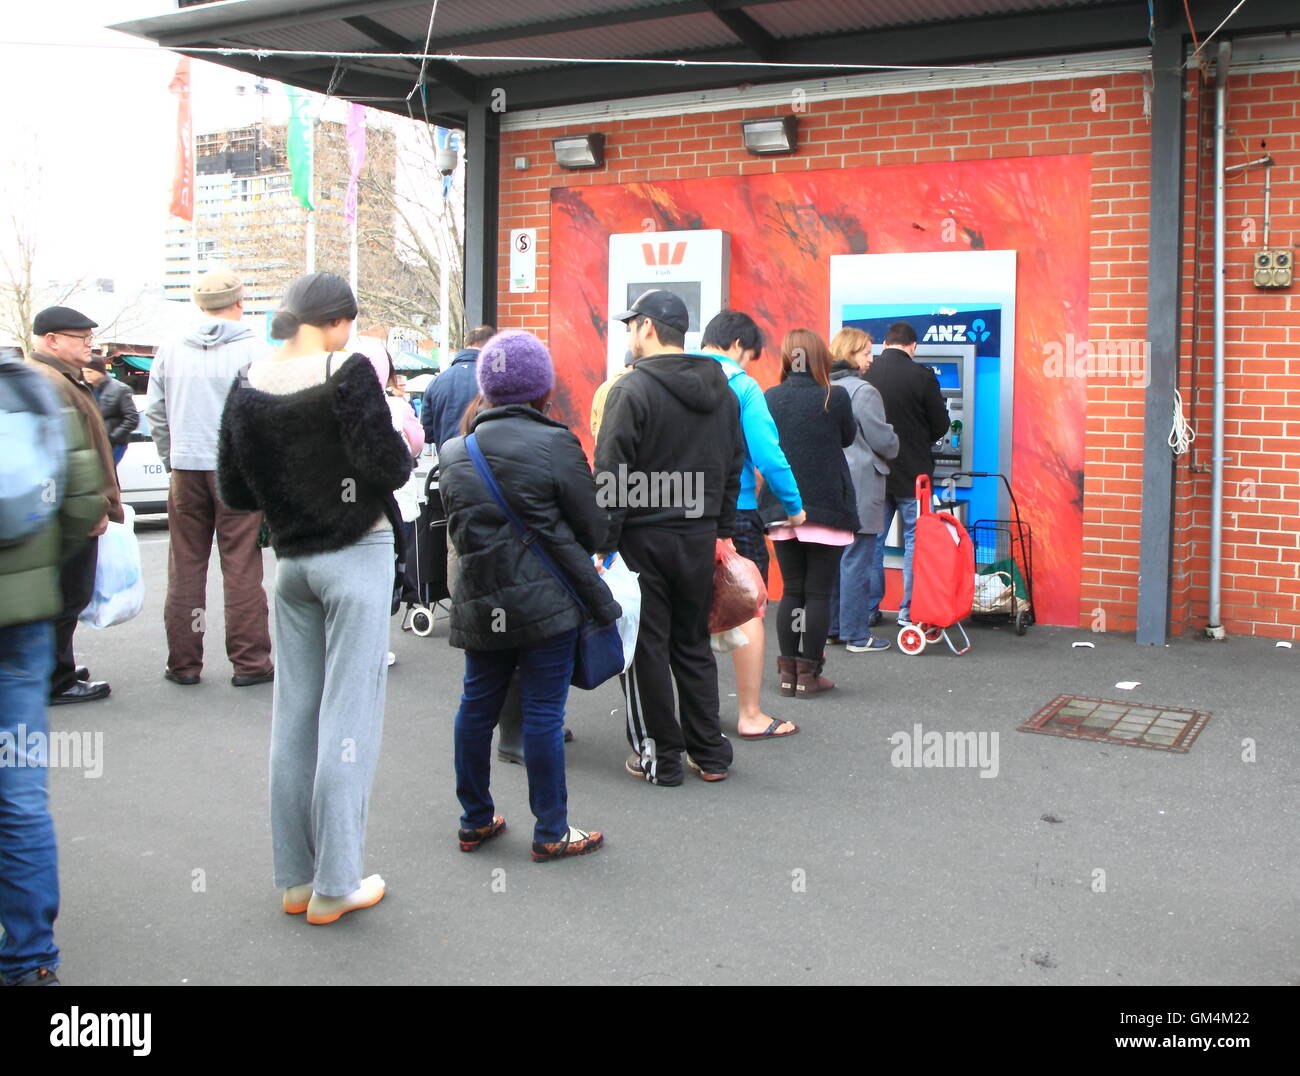 People queue for ATM in Melbourne Australia. Stock Photo